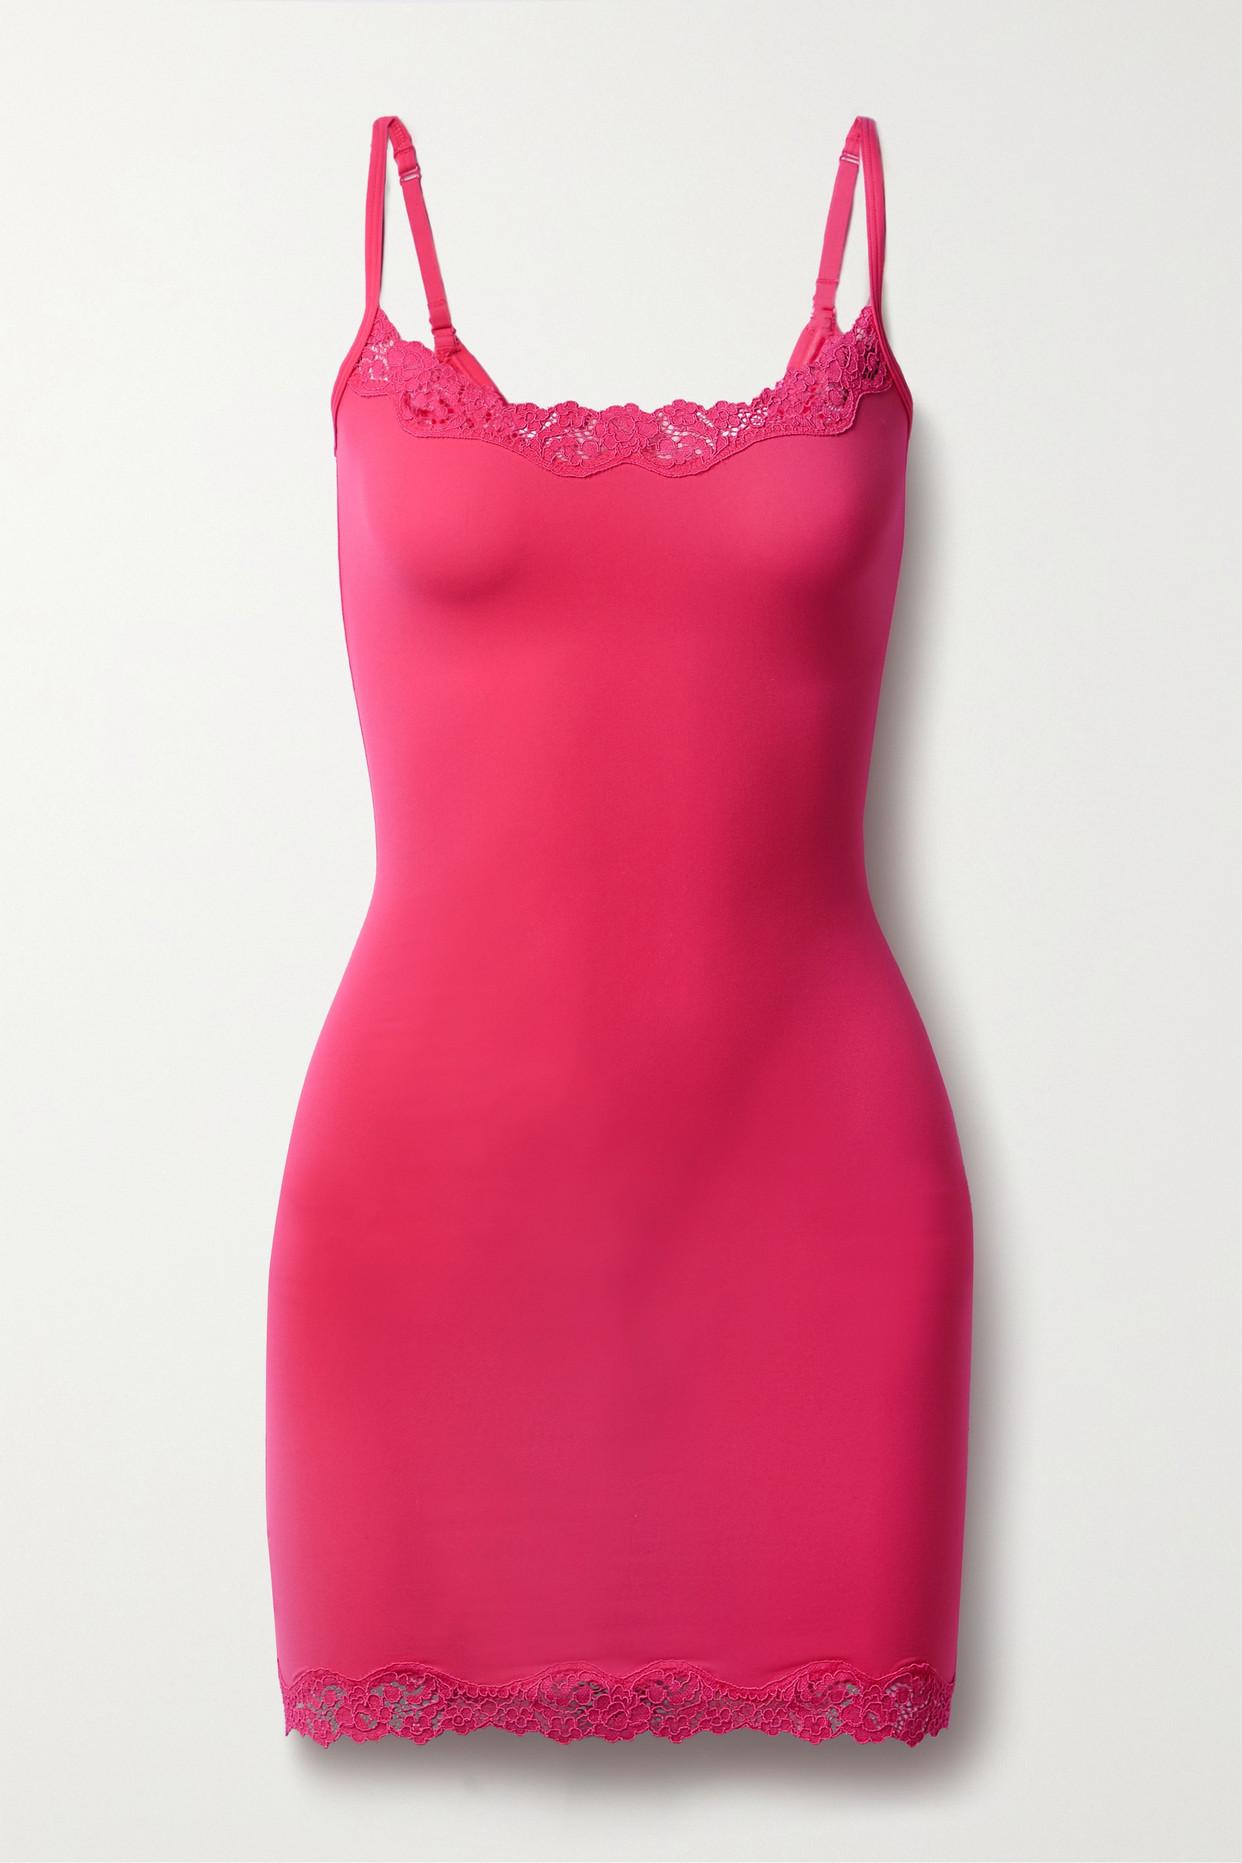 https://cdna.lystit.com/photos/net-a-porter/d05e1e51/skims-Pink-Fits-Everybody-Lace-trimmed-Stretch-jersey-Slip-Dress.jpeg